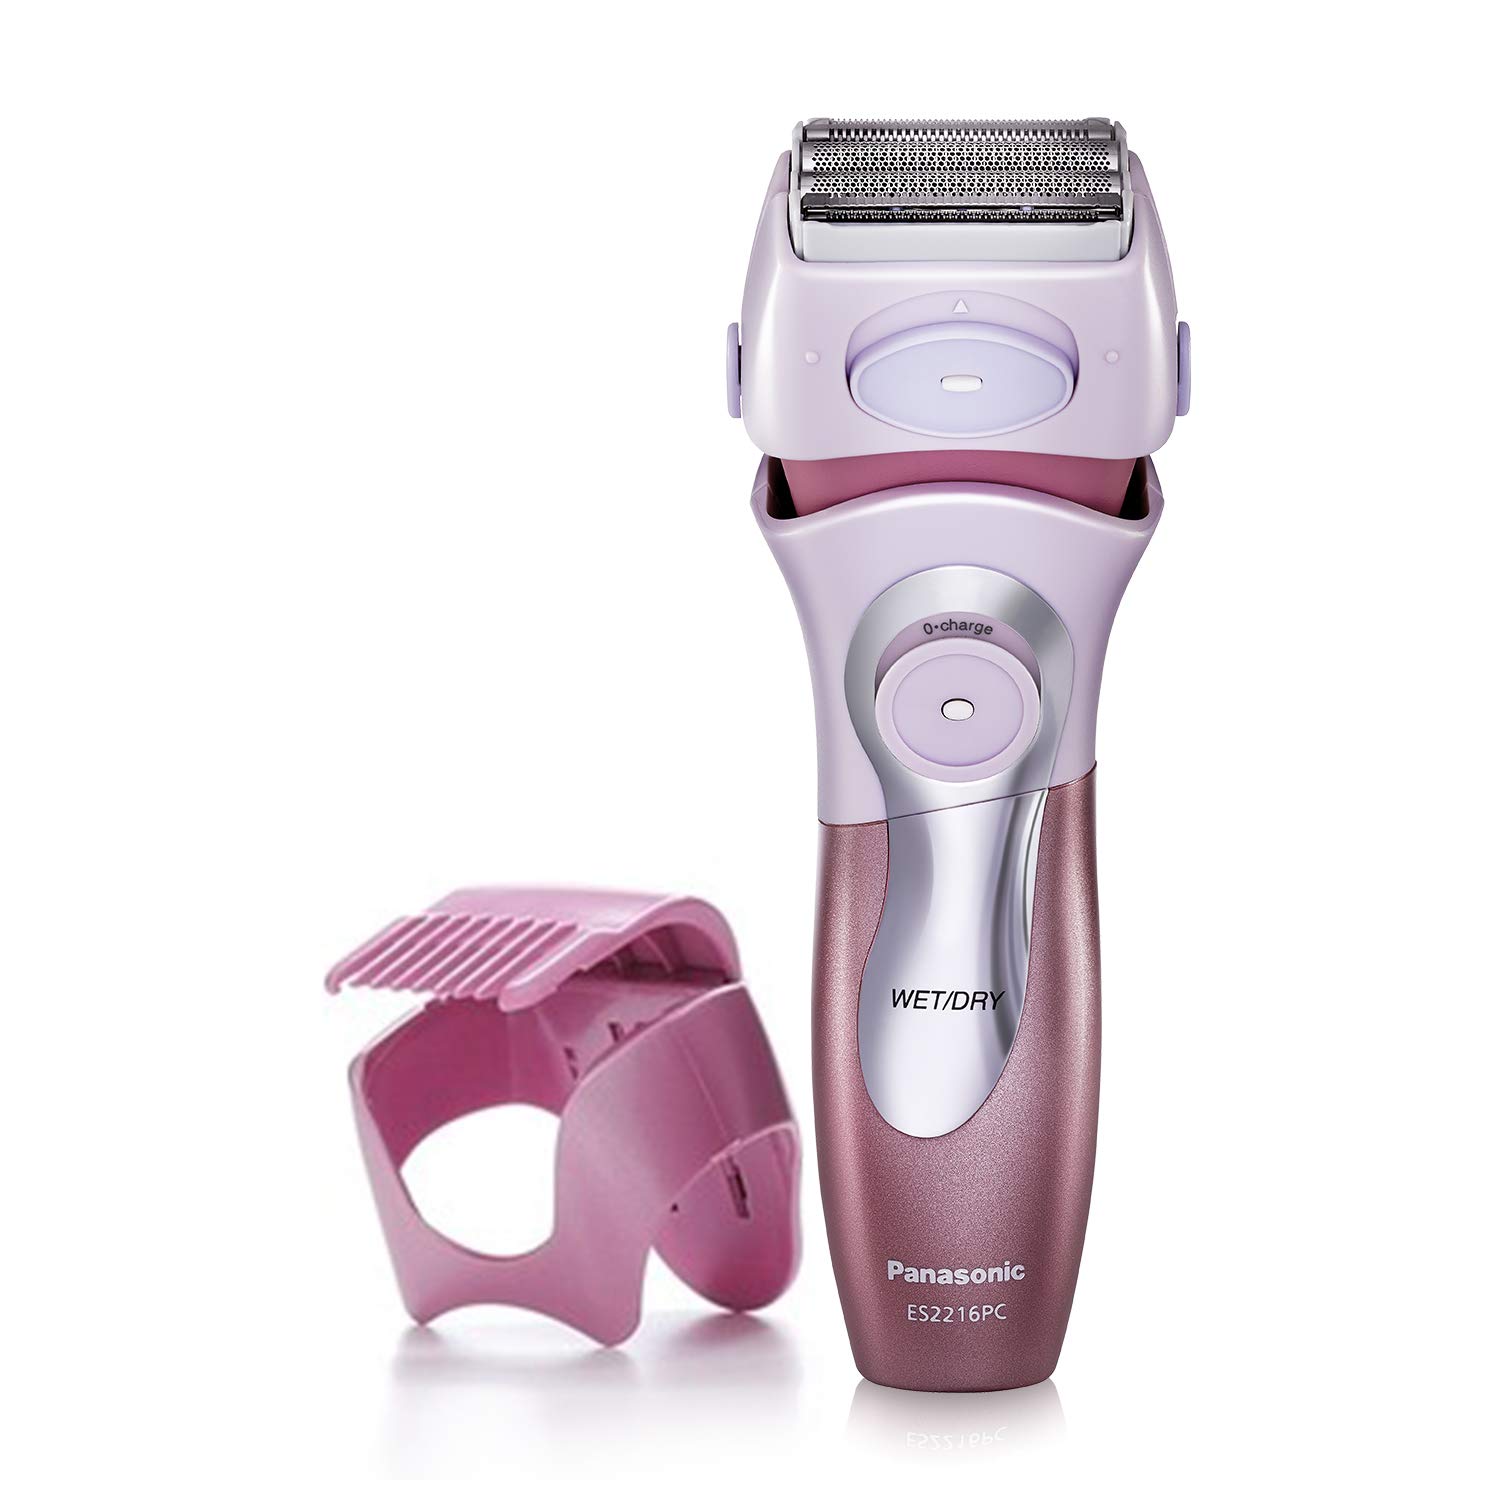 Panasonic Electric Shaver (ES2216PC) for Women